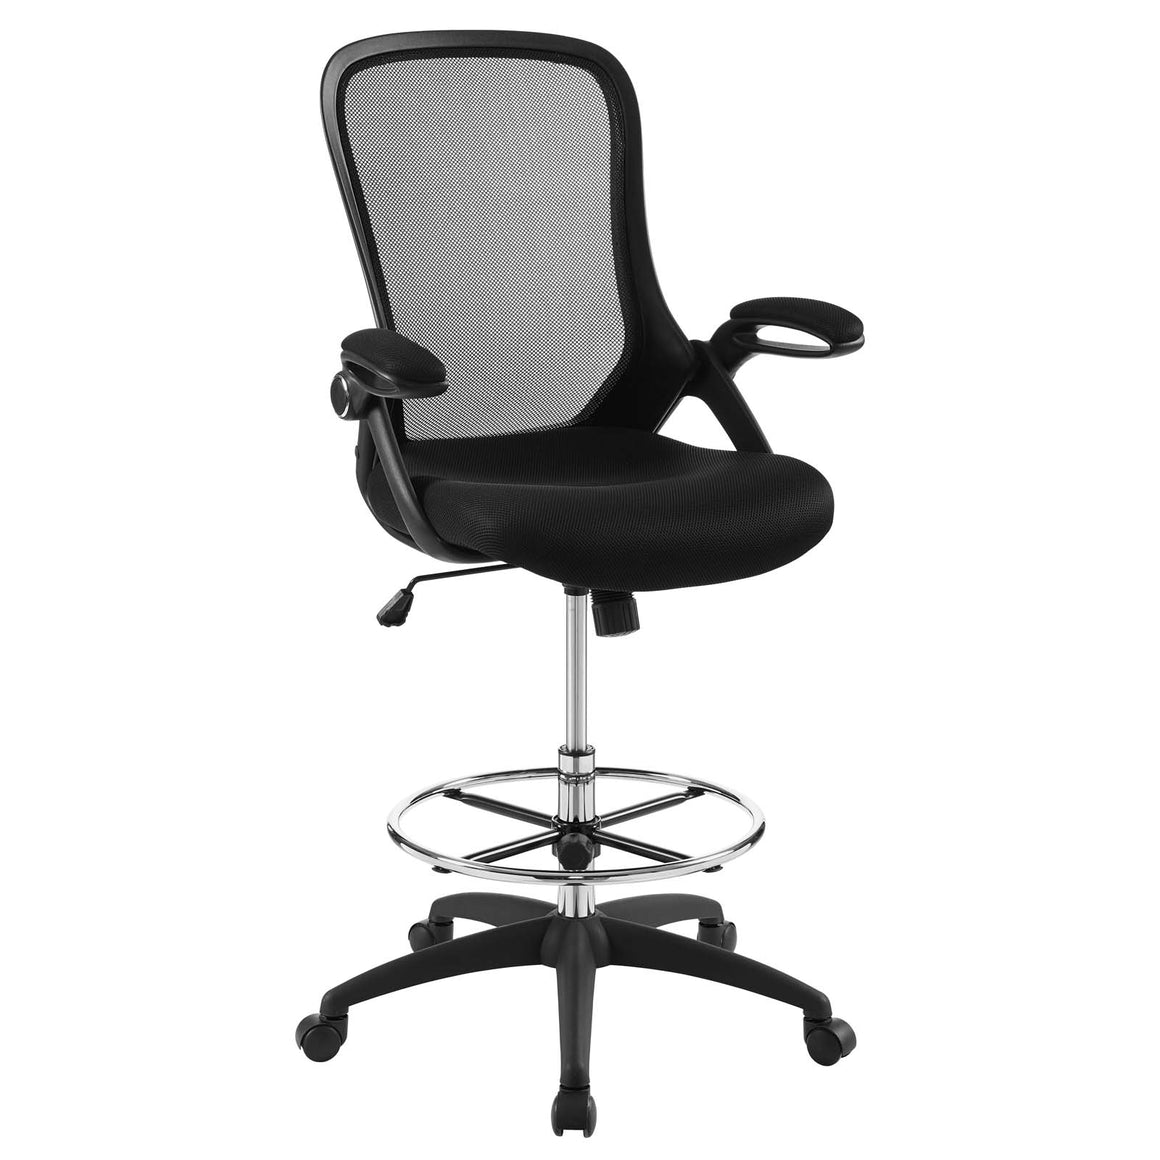 Assert Mesh Drafting Chair in Black